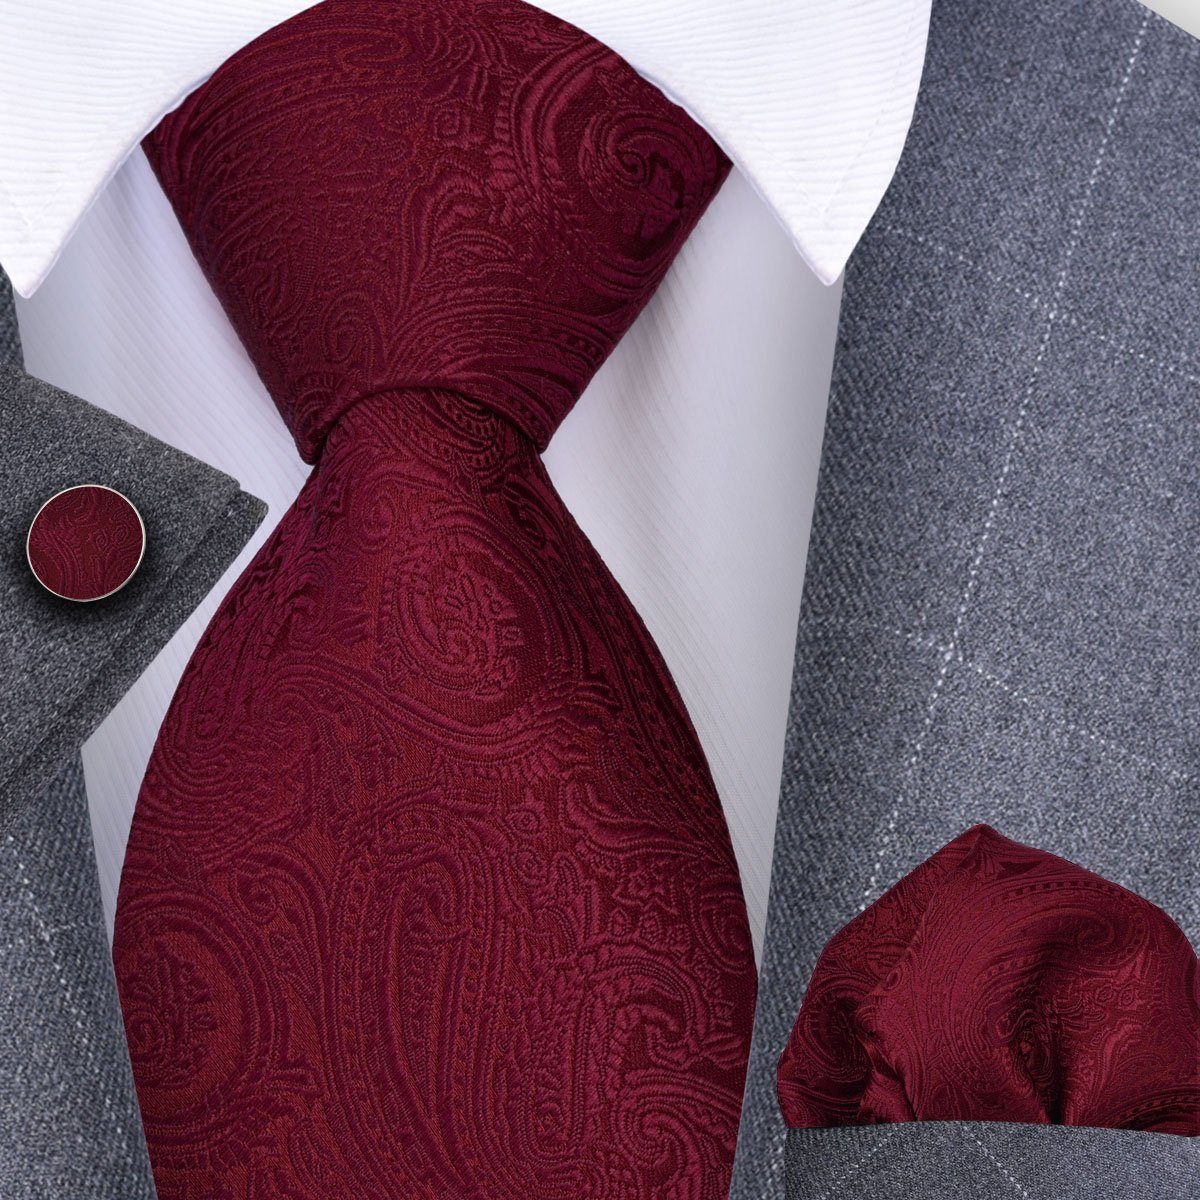 + Krawatte Herrenkrawatte Krawatten-Set Krawatte Seide Einstecktuch Seidenkrawatte Moschen-Bayern - Manschettenknöpfe Rot + Krawatte Trachtenkrawatte